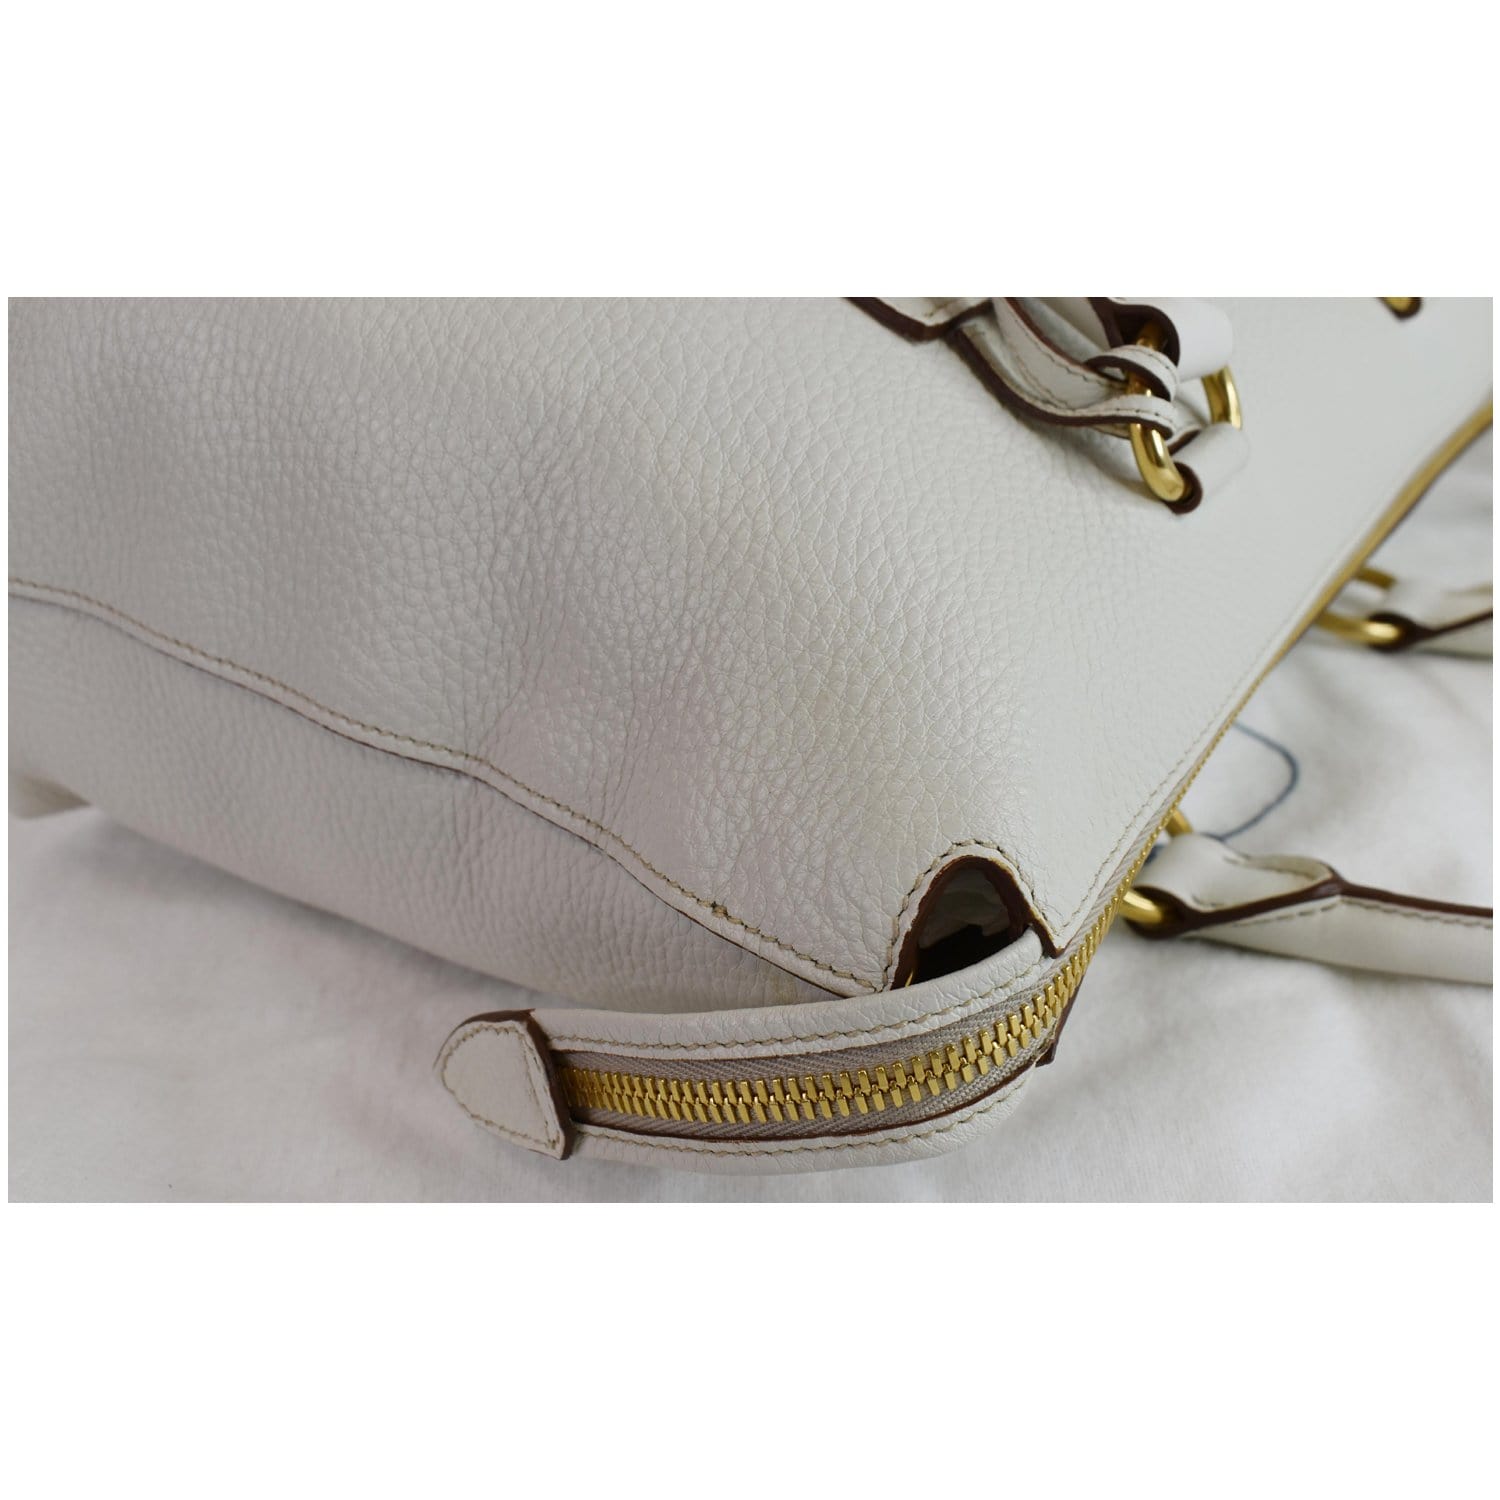 Prada Vitello Daino Pebbled Leather Zip Shoulder Bag